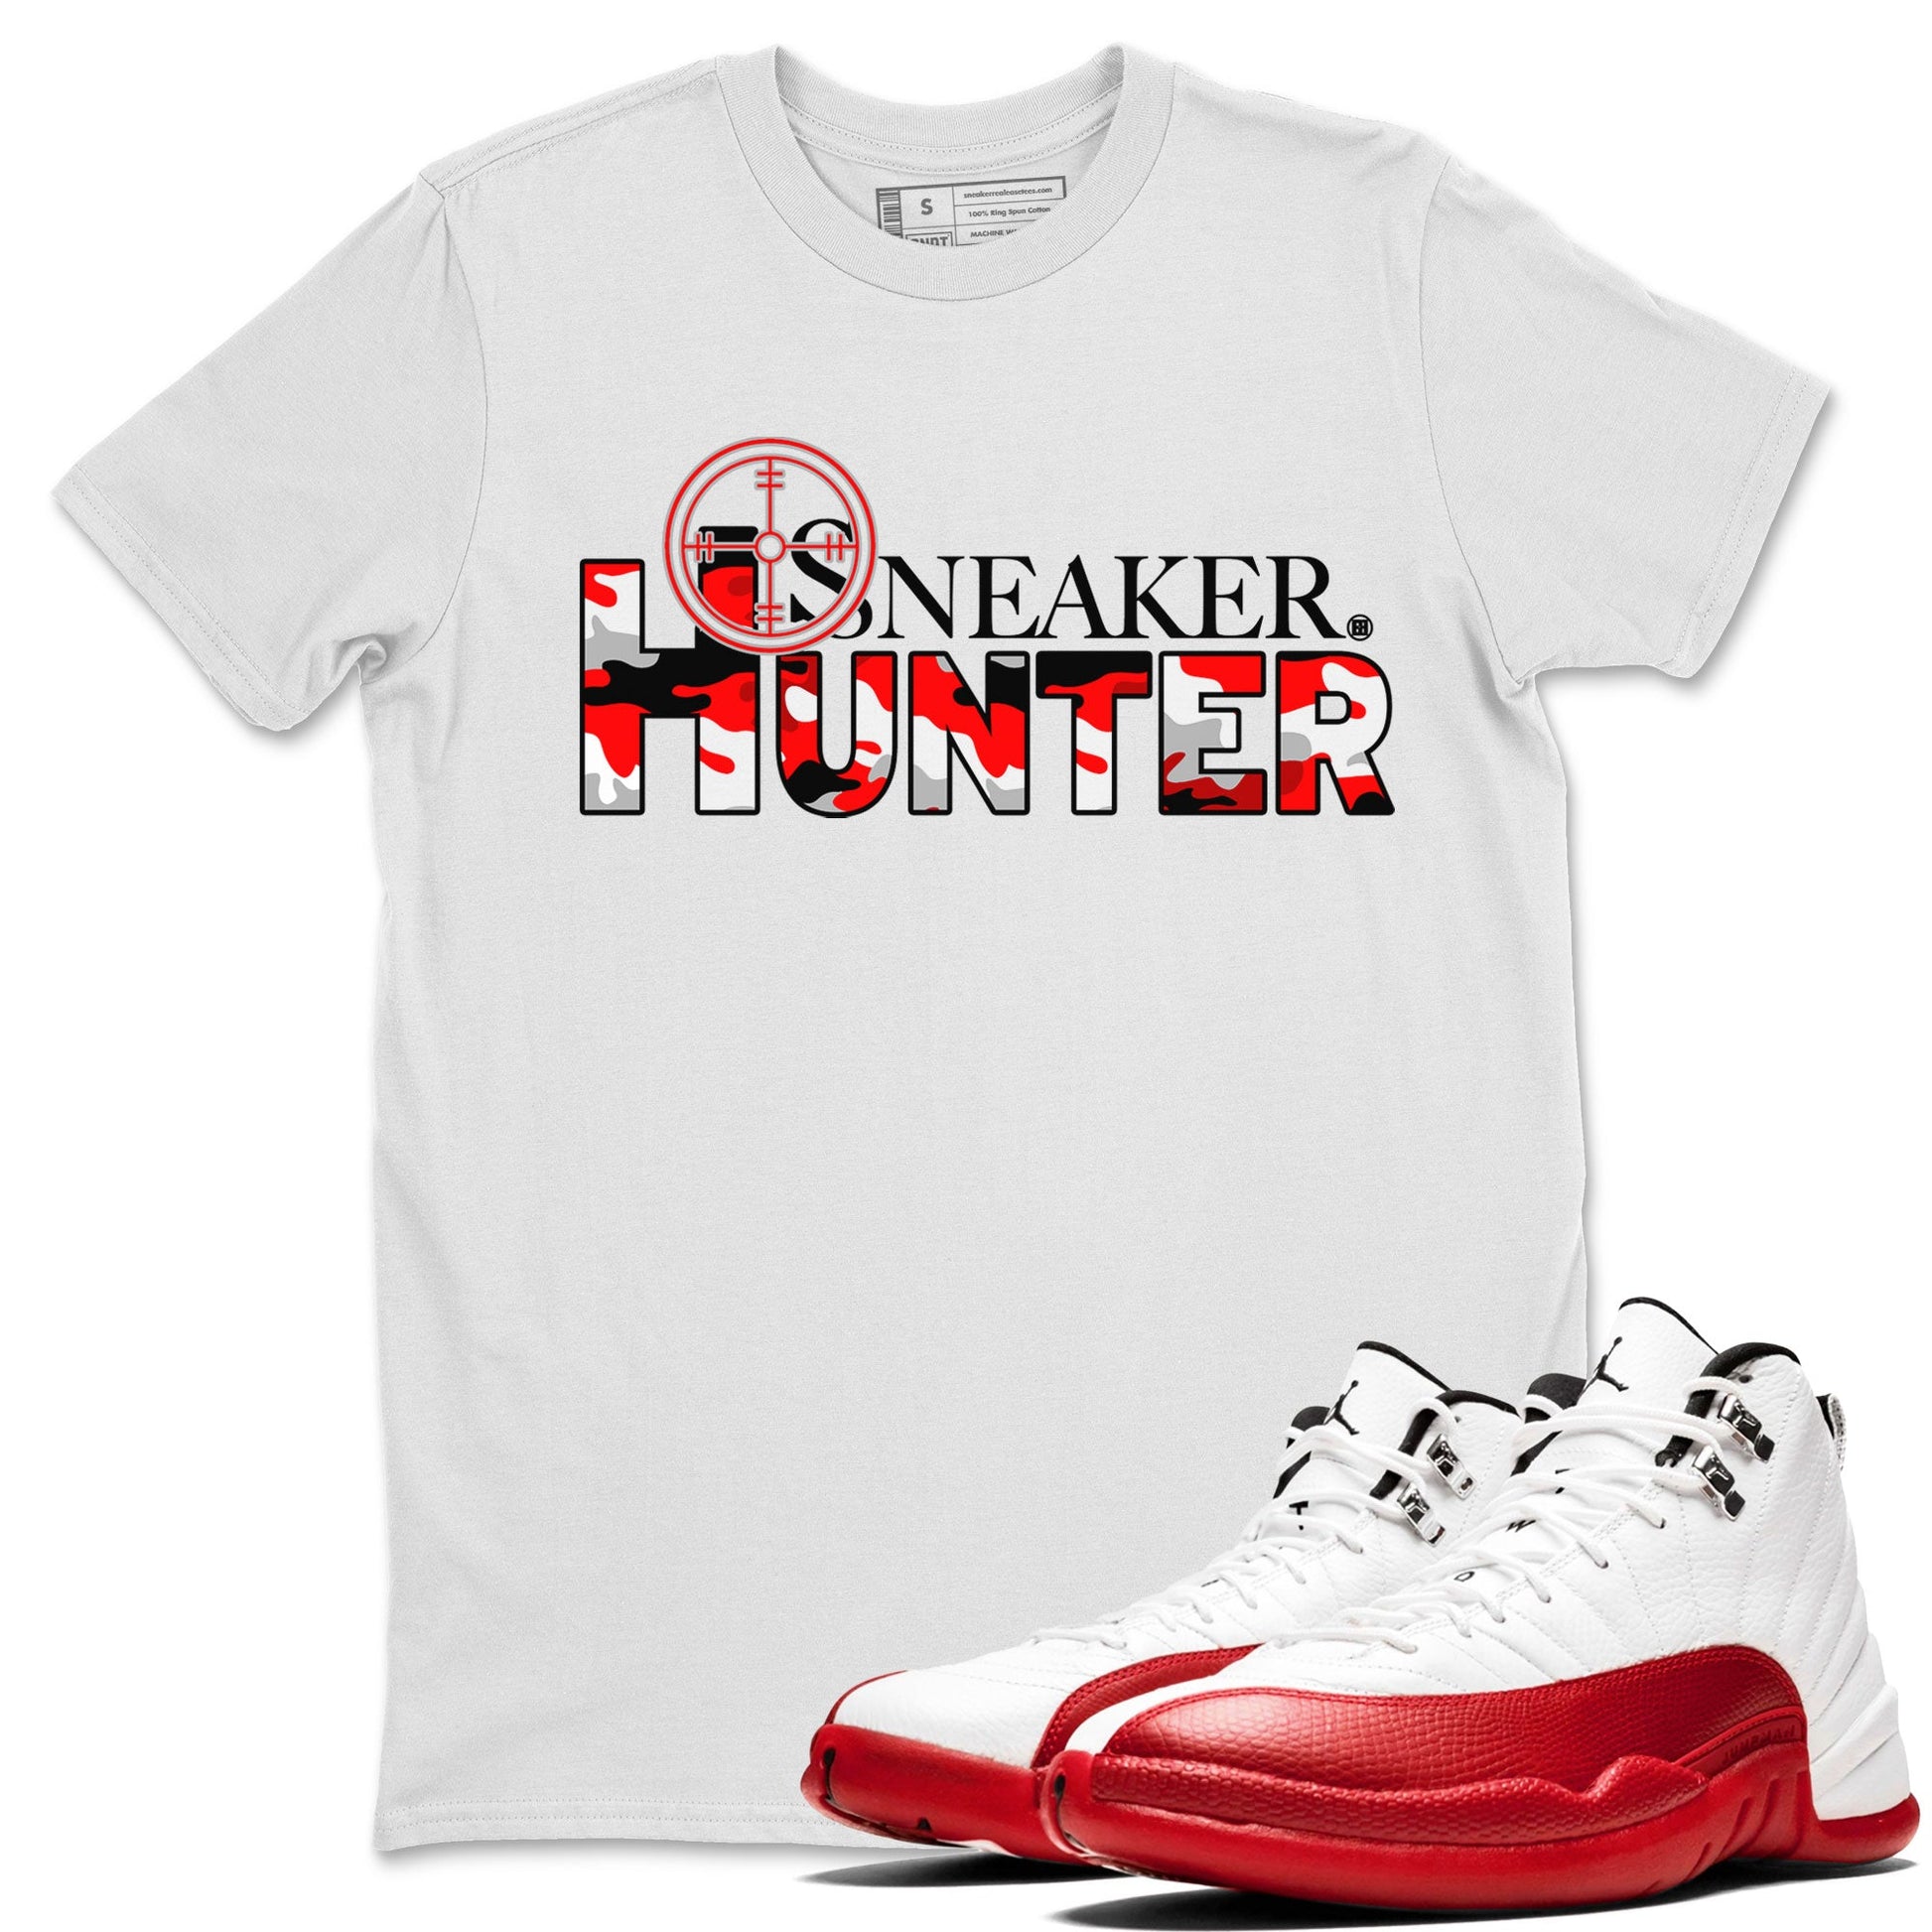 Air Jordan 12 Cherry shirt to match jordans Sneaker Hunter sneaker tees Air Jordan 12 Retro Cherry SNRT Sneaker Release Tees Unisex White 1 T-Shirt